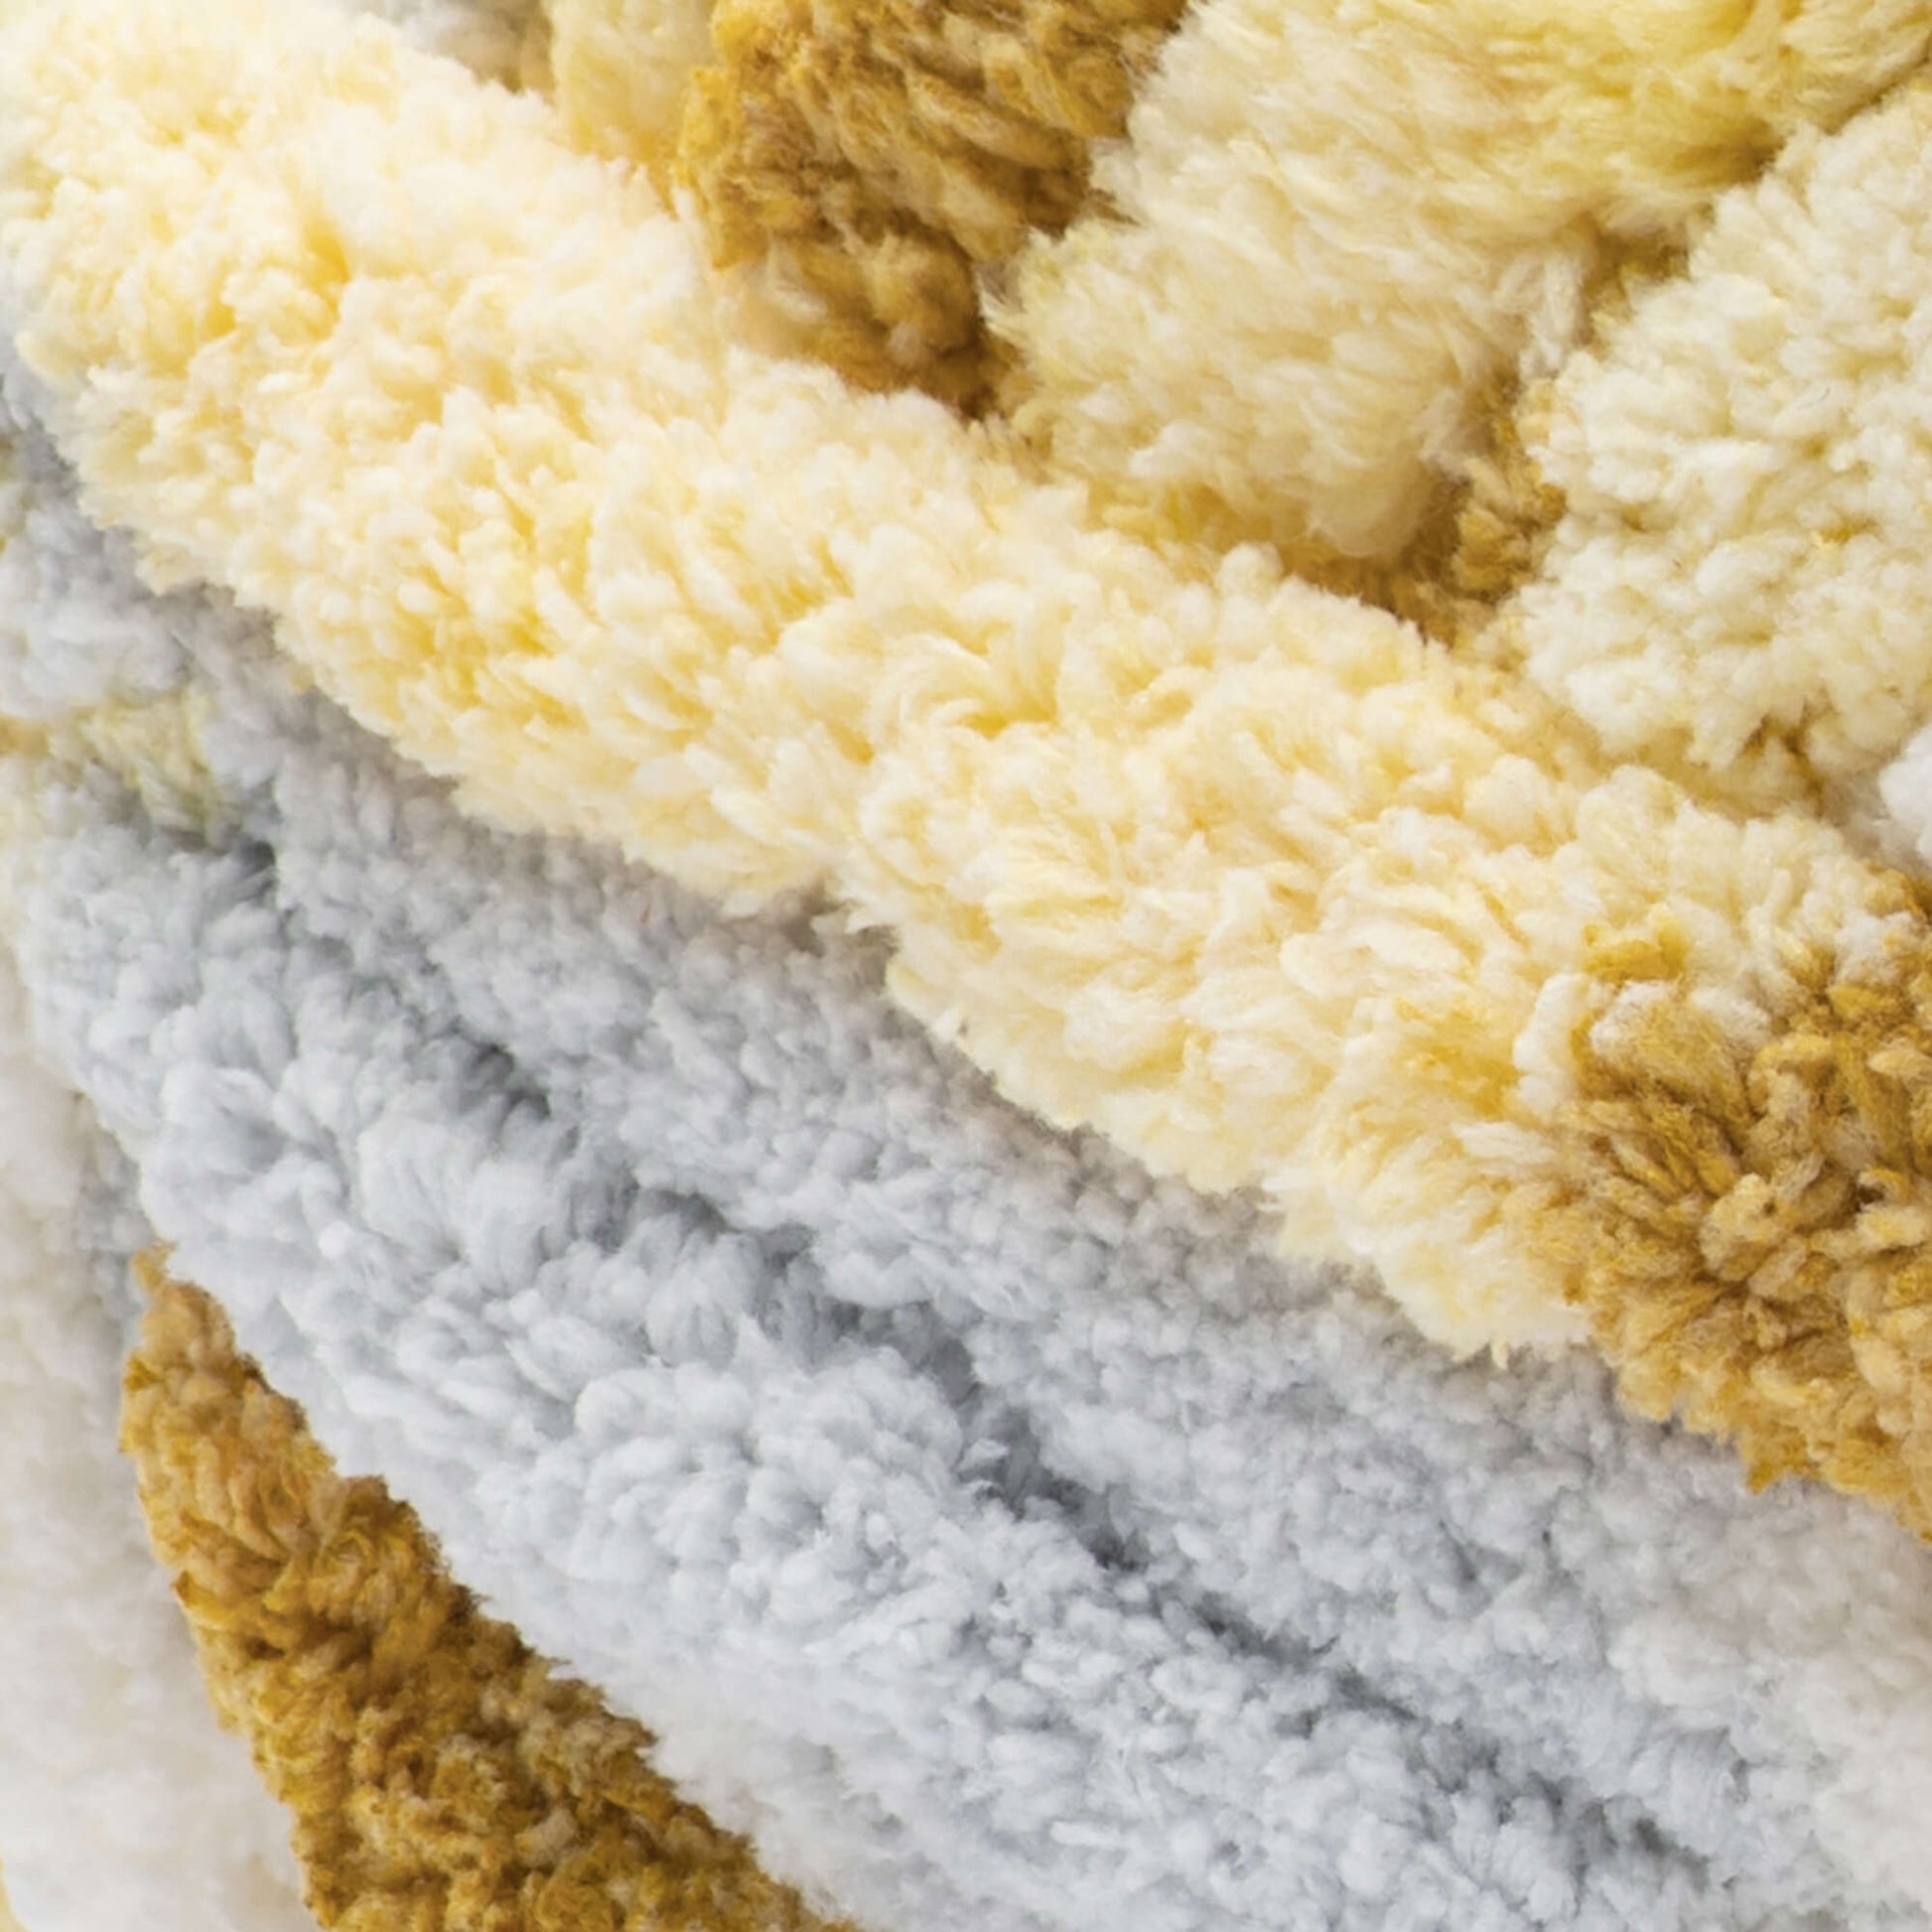 Bernat Blanket Extra Thick Yarn (600g/21.2oz) - Discontinued Shades Dandelion Varg